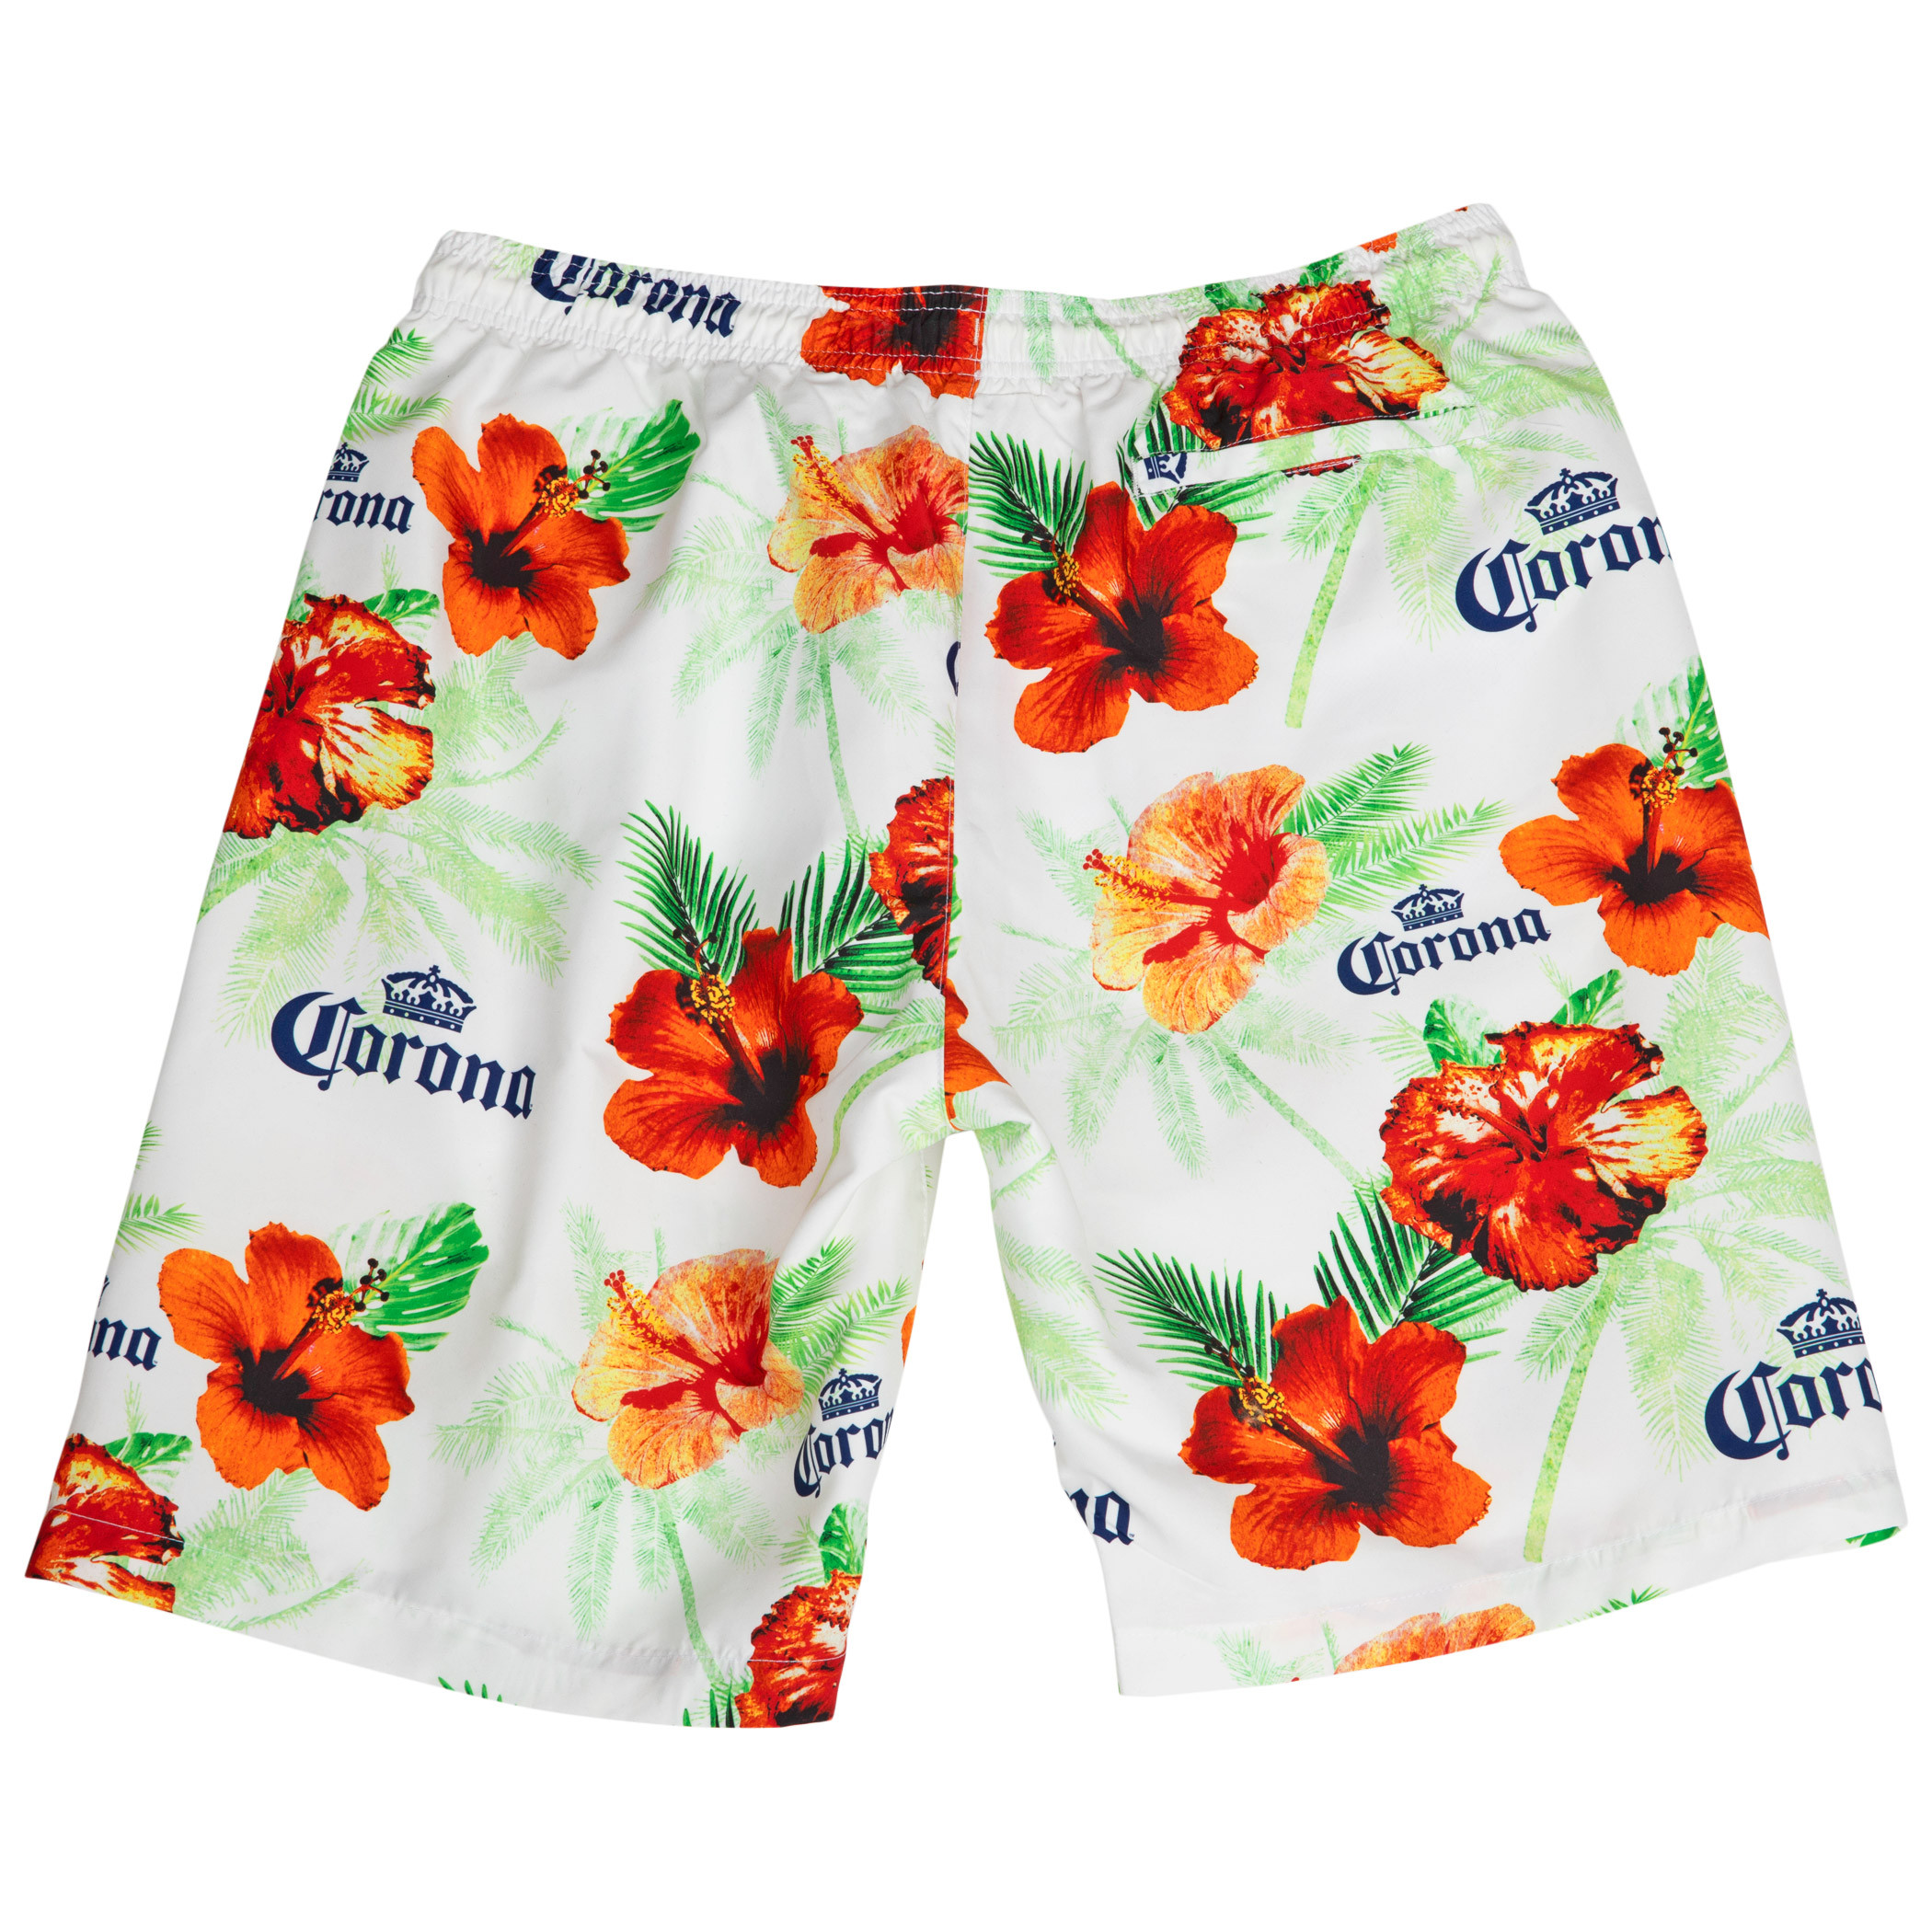 Corona Extra Floral Beach Board Shorts